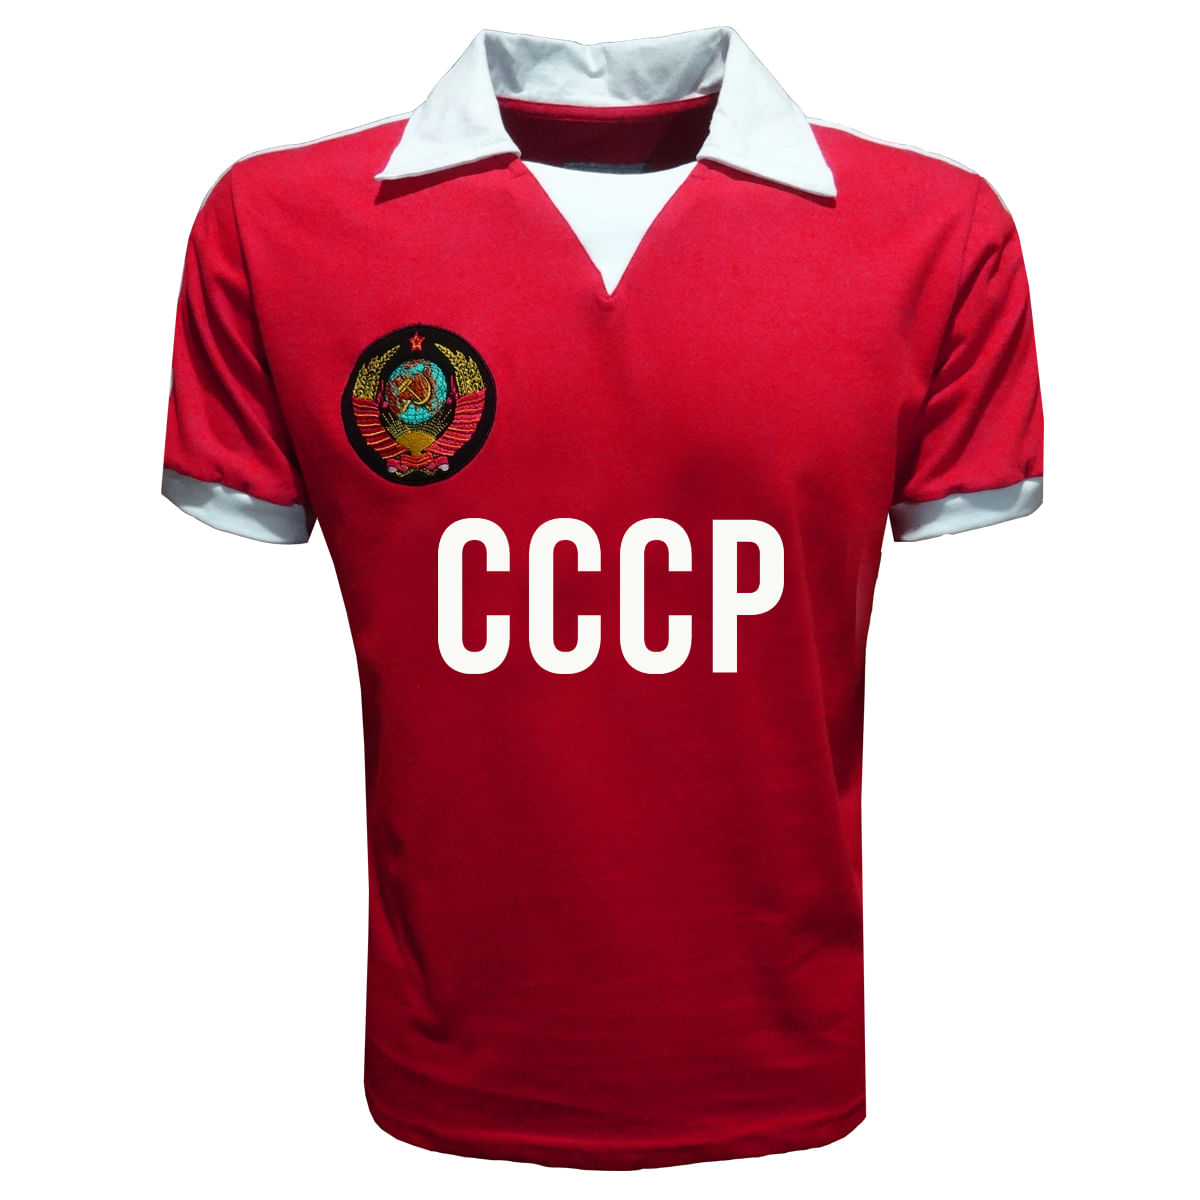 CCCP 1980